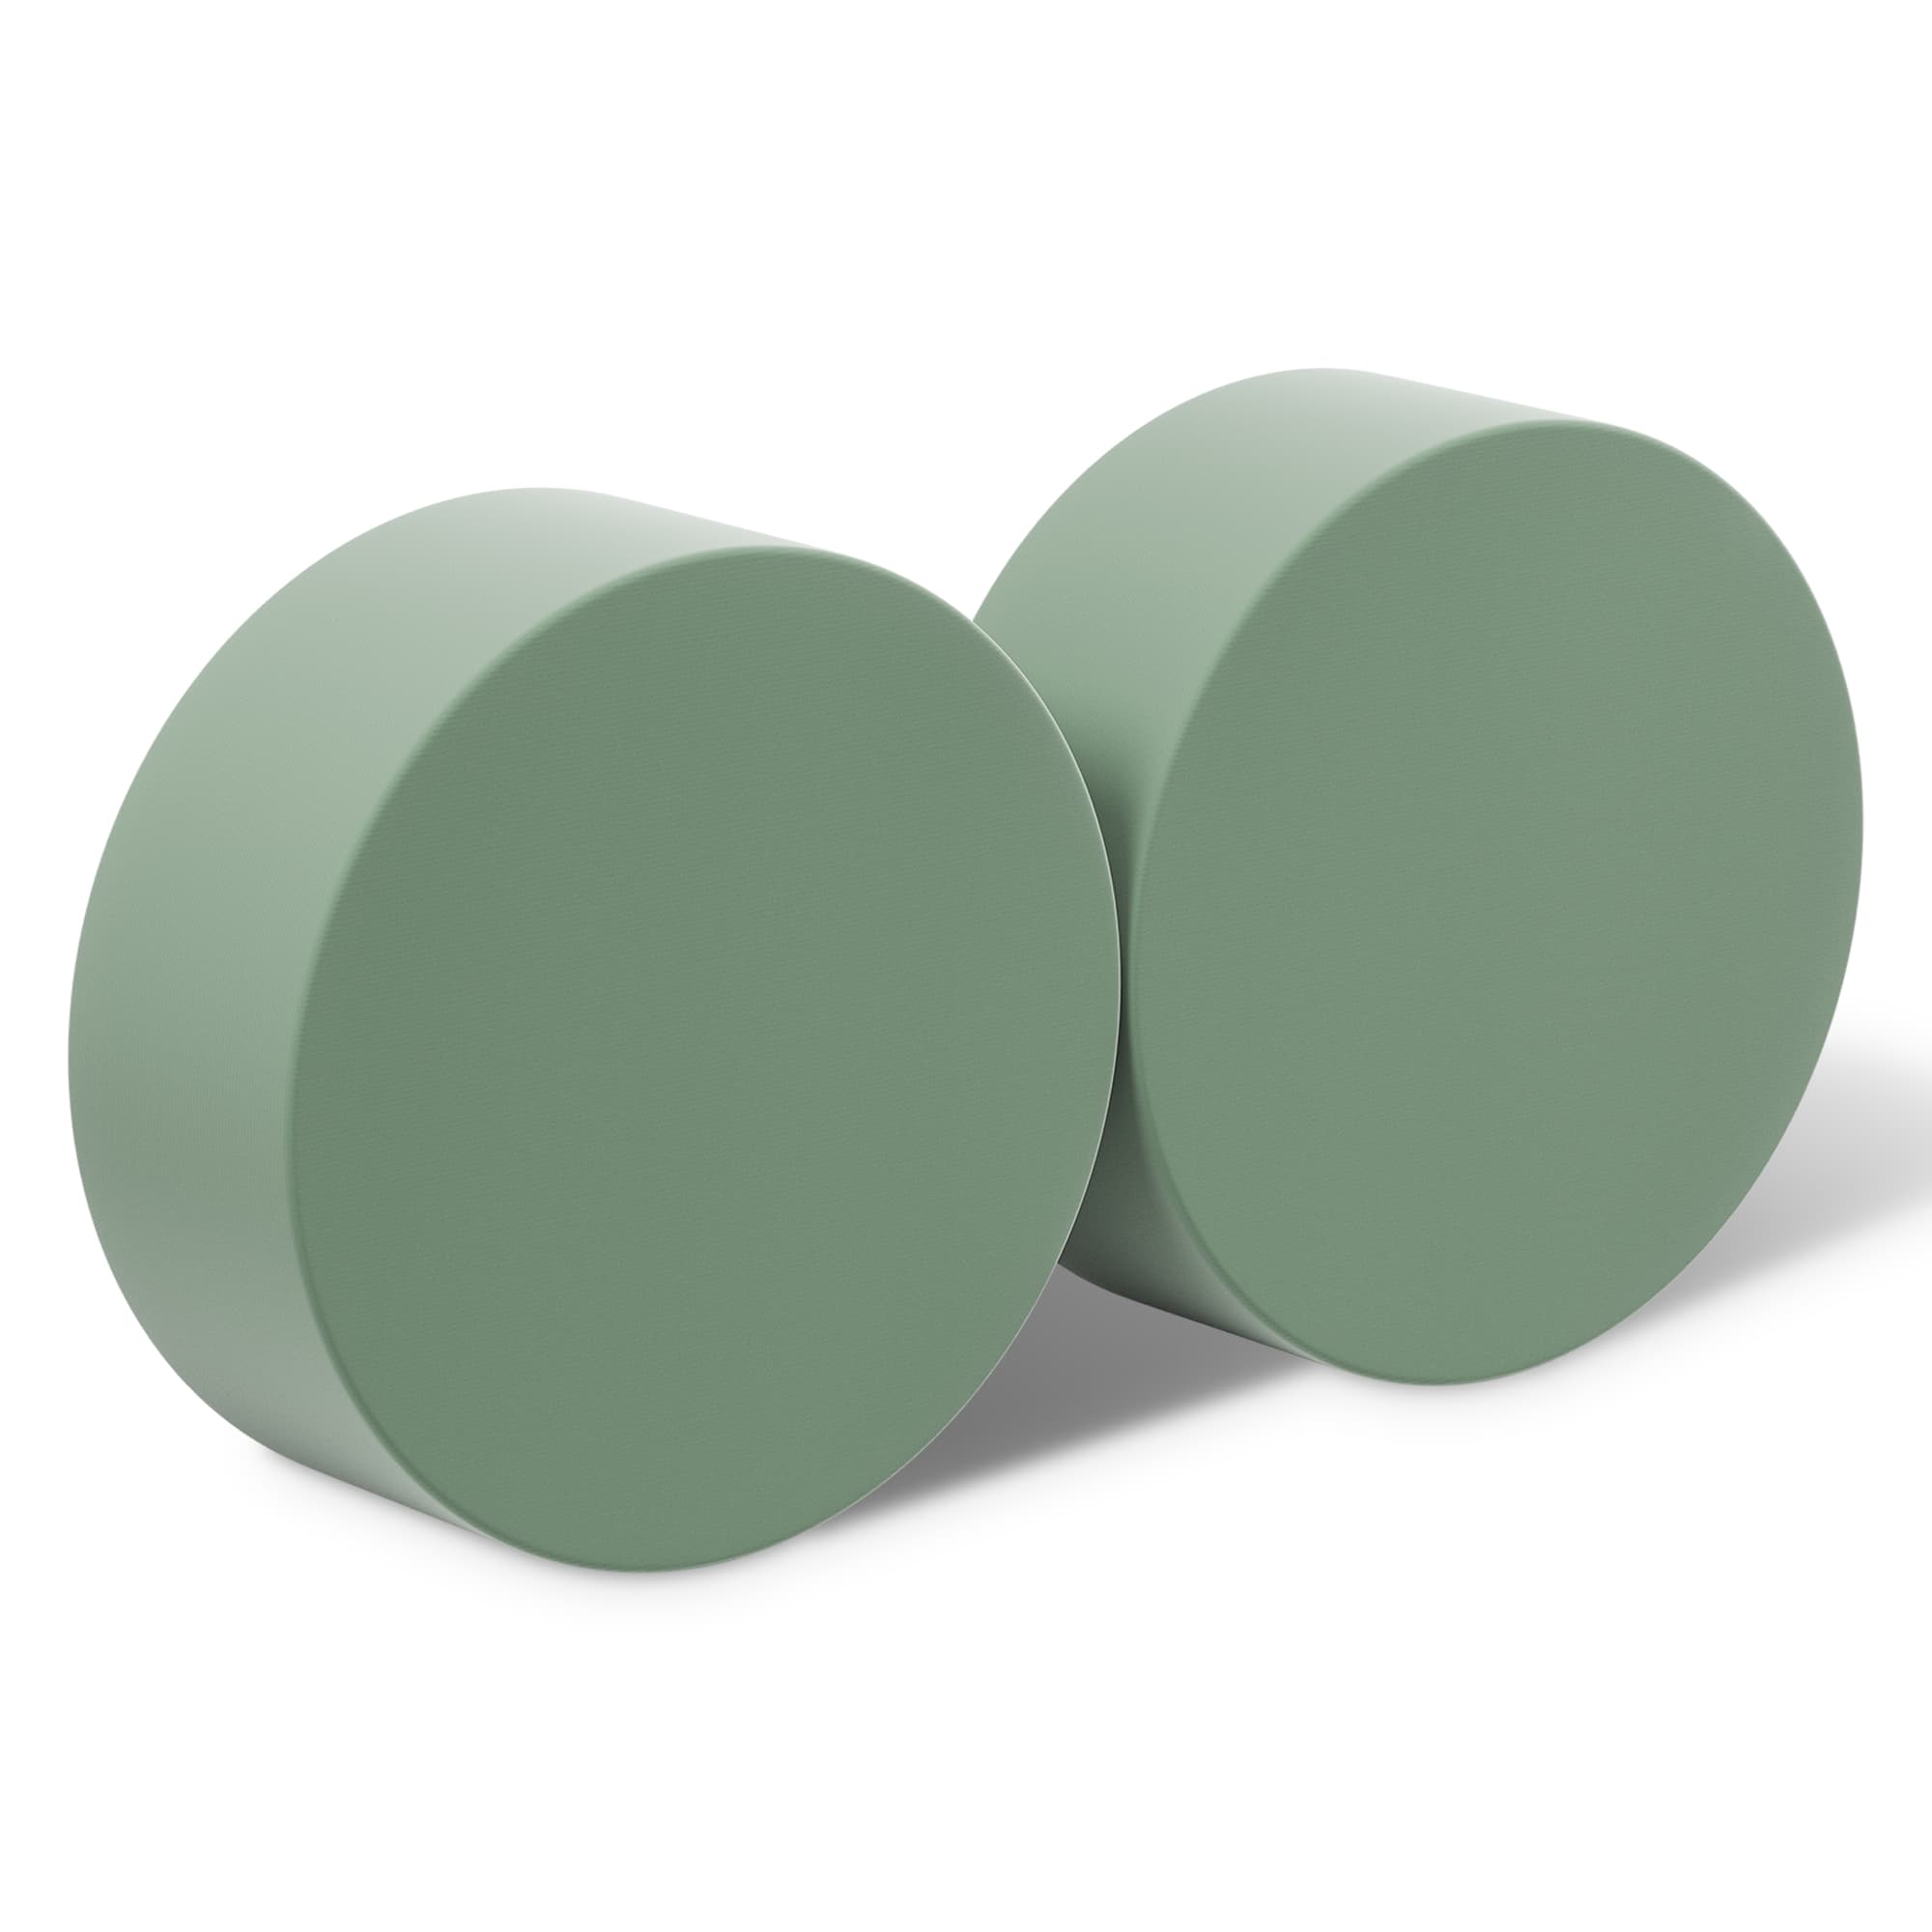 Floracraft DryFoM Disc Green - Each